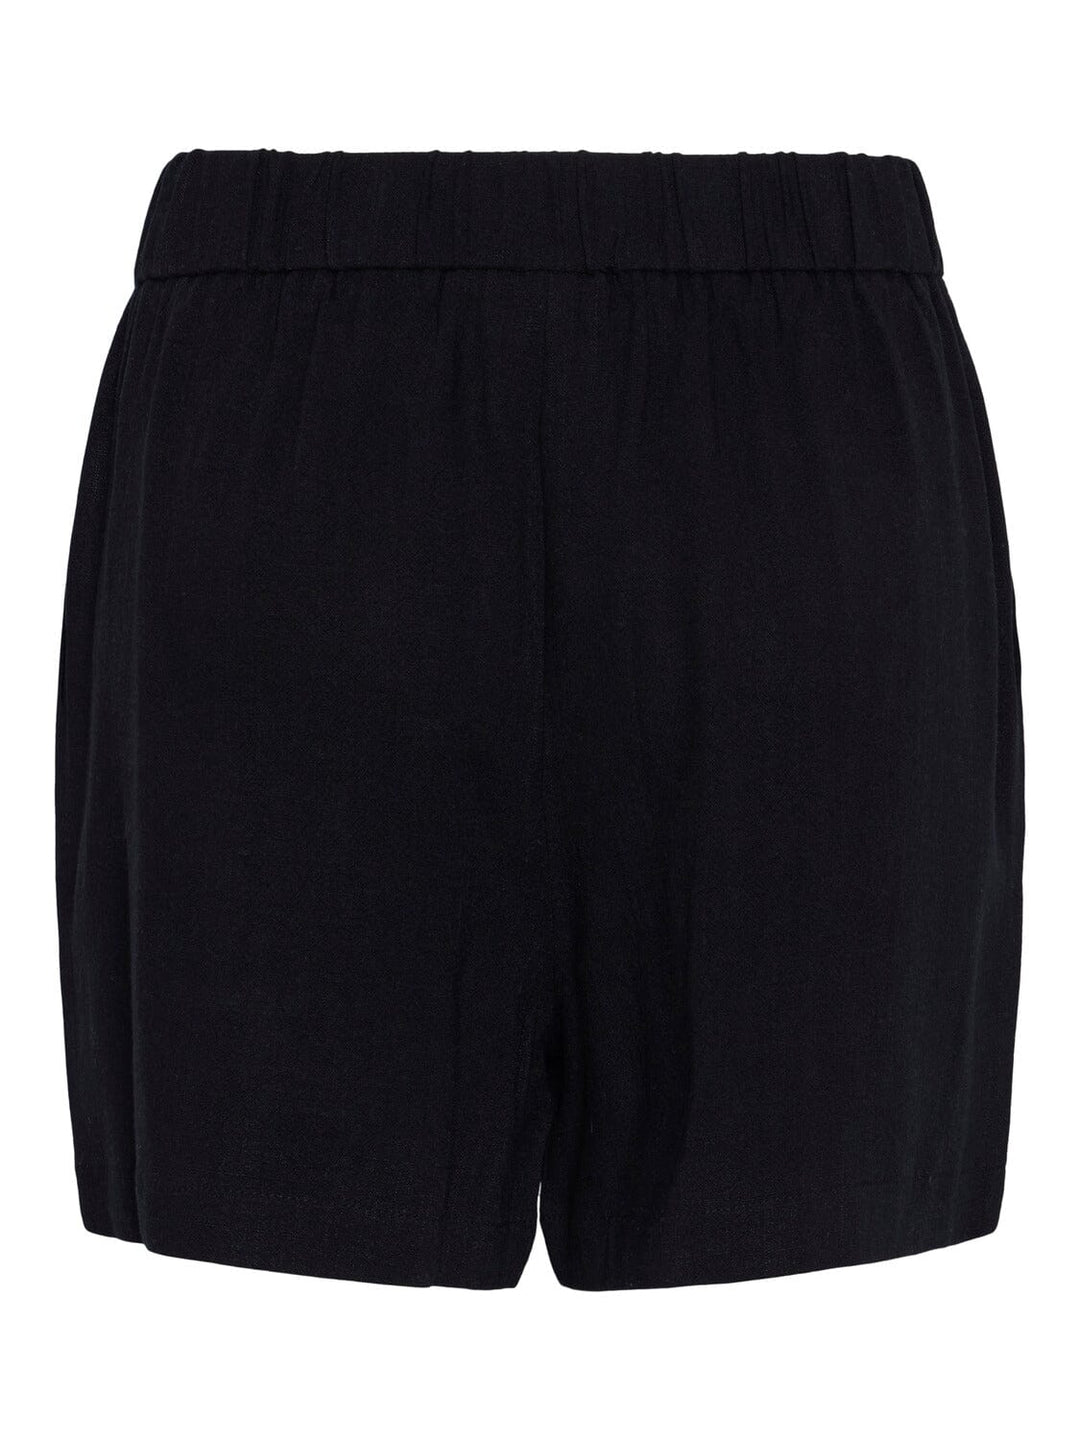 Pieces, Pcvinsty Hw Linen Shorts, Black